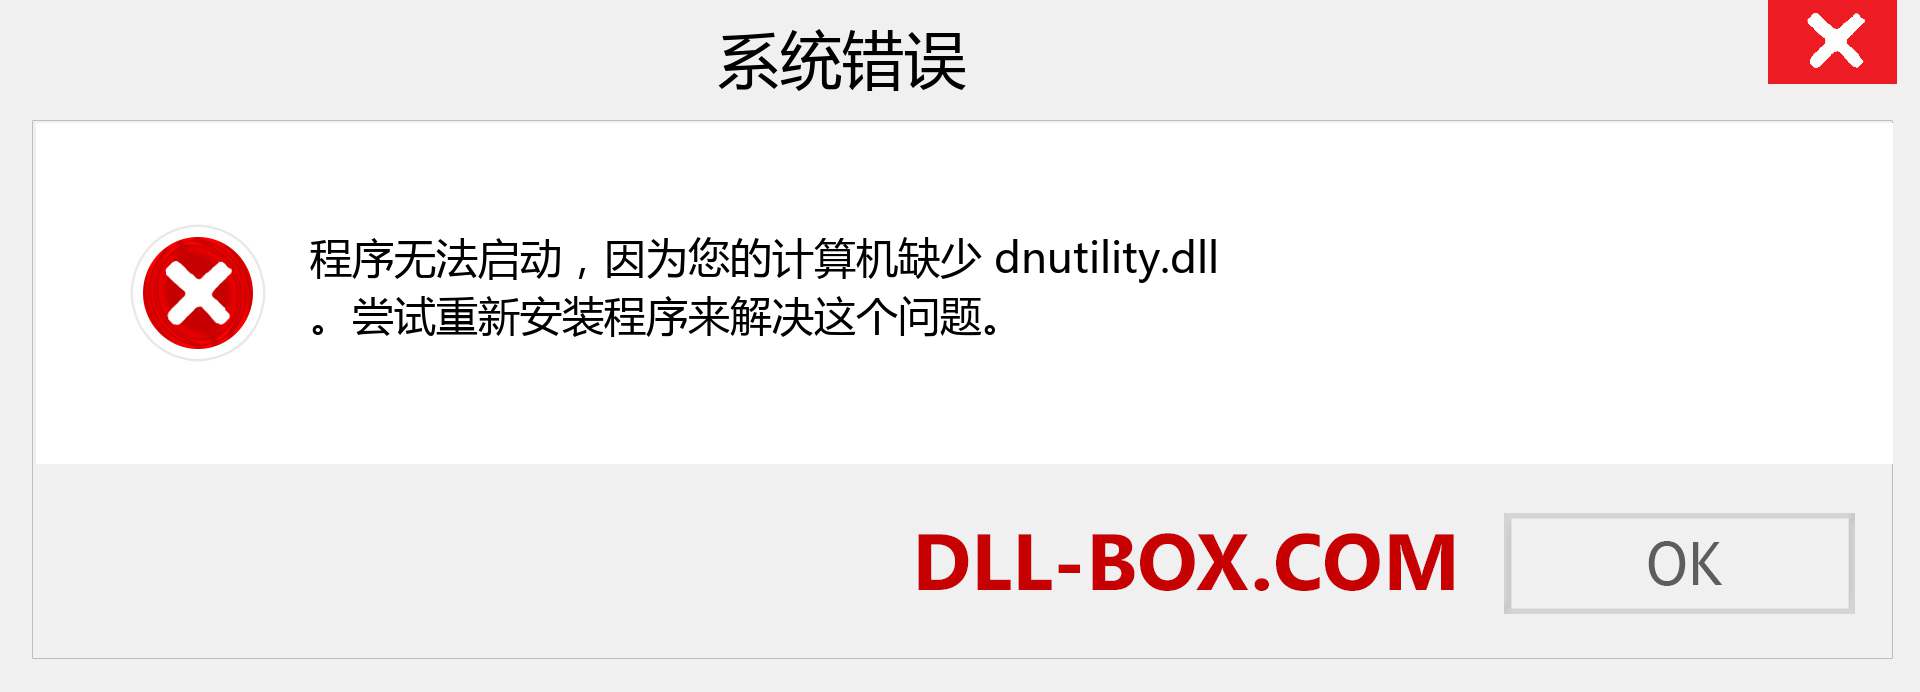 dnutility.dll 文件丢失？。 适用于 Windows 7、8、10 的下载 - 修复 Windows、照片、图像上的 dnutility dll 丢失错误